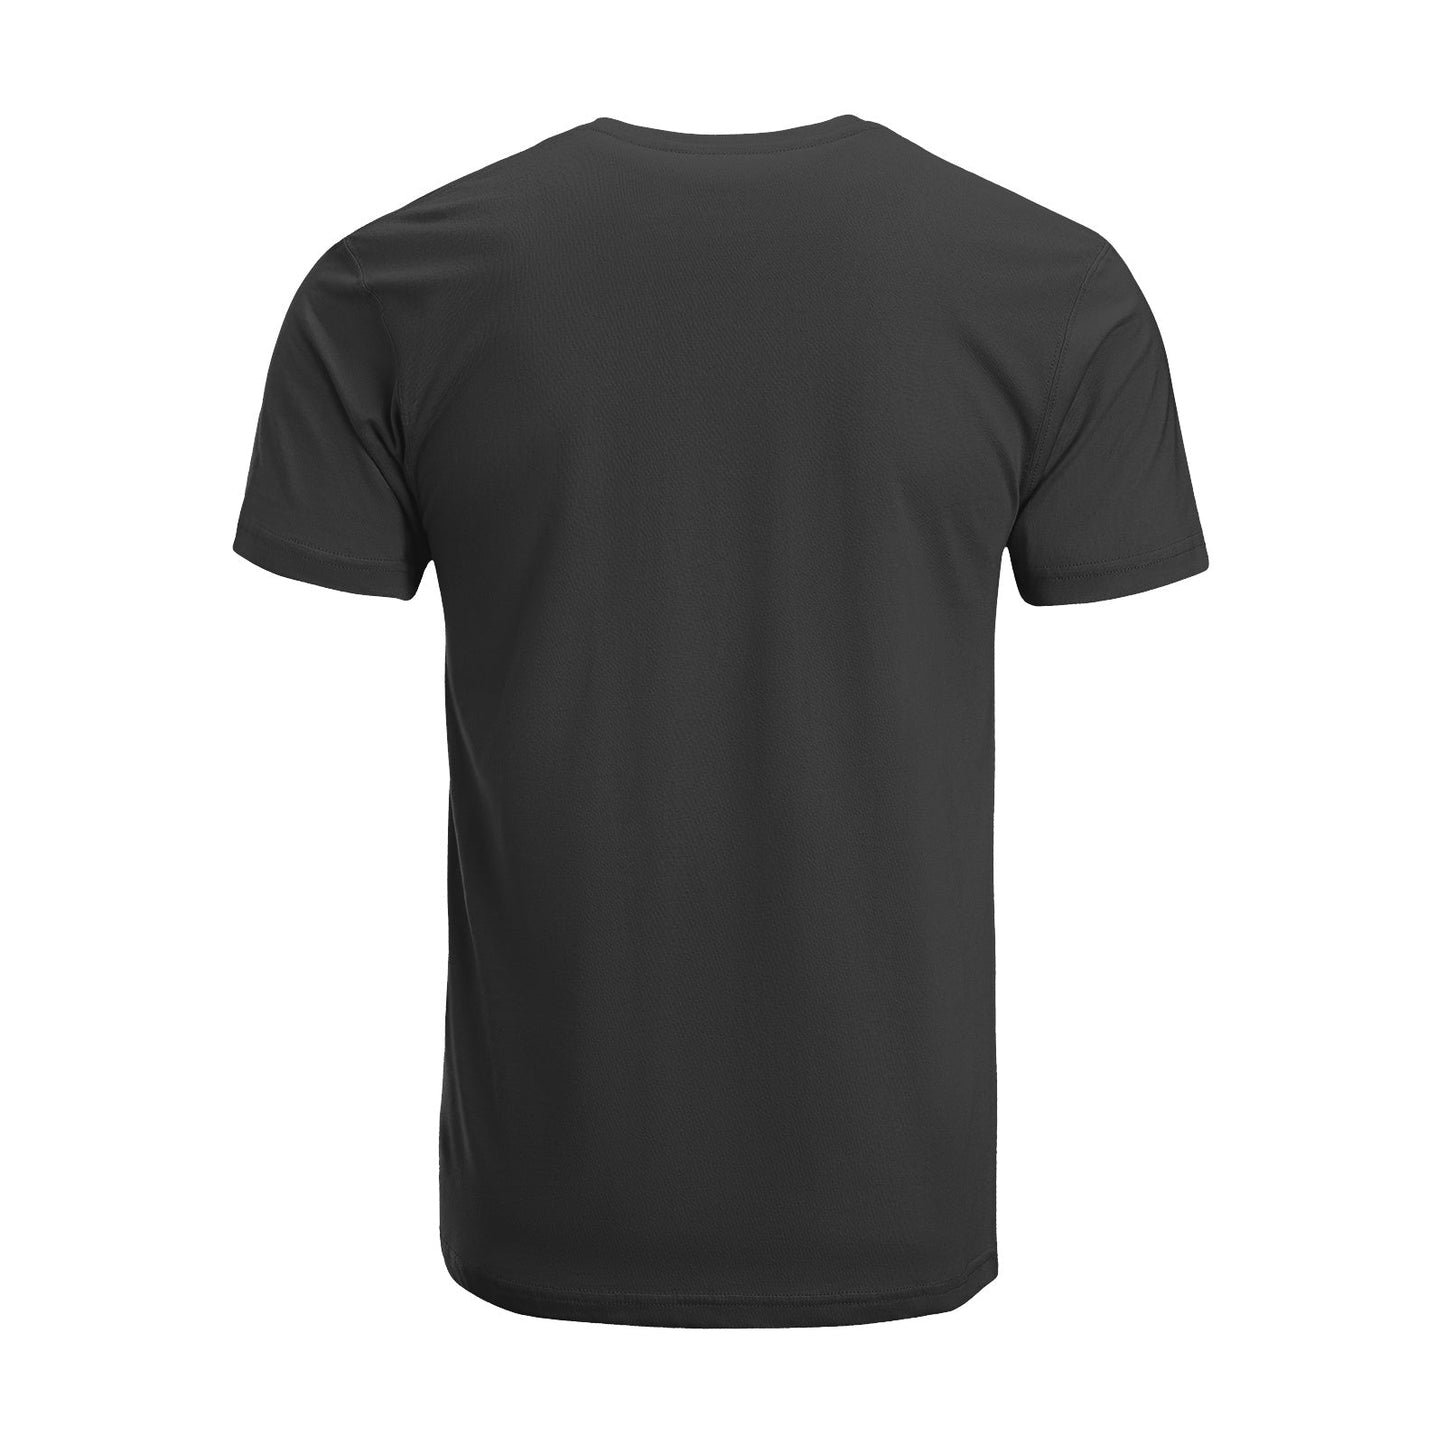 Unisex Short Sleeve Crew Neck Cotton Jersey T-Shirt MOM 11